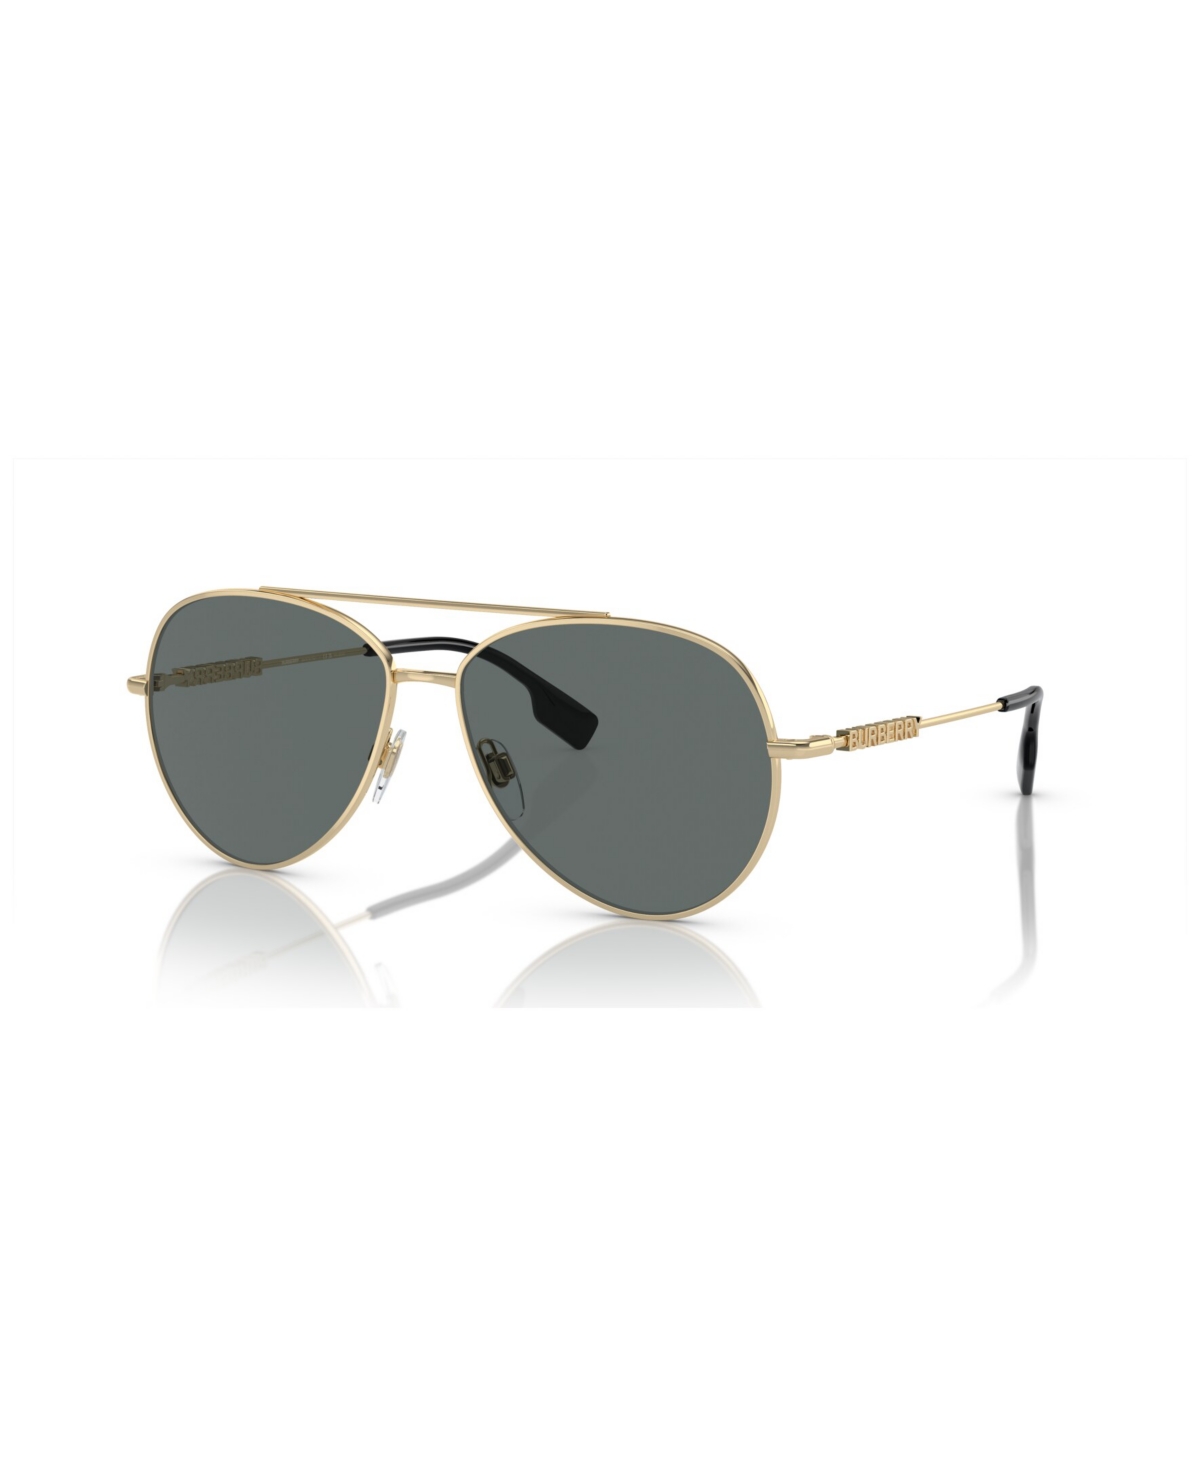 Burberry Women's Polarized Sunglasses, Be3147 In Light Gold